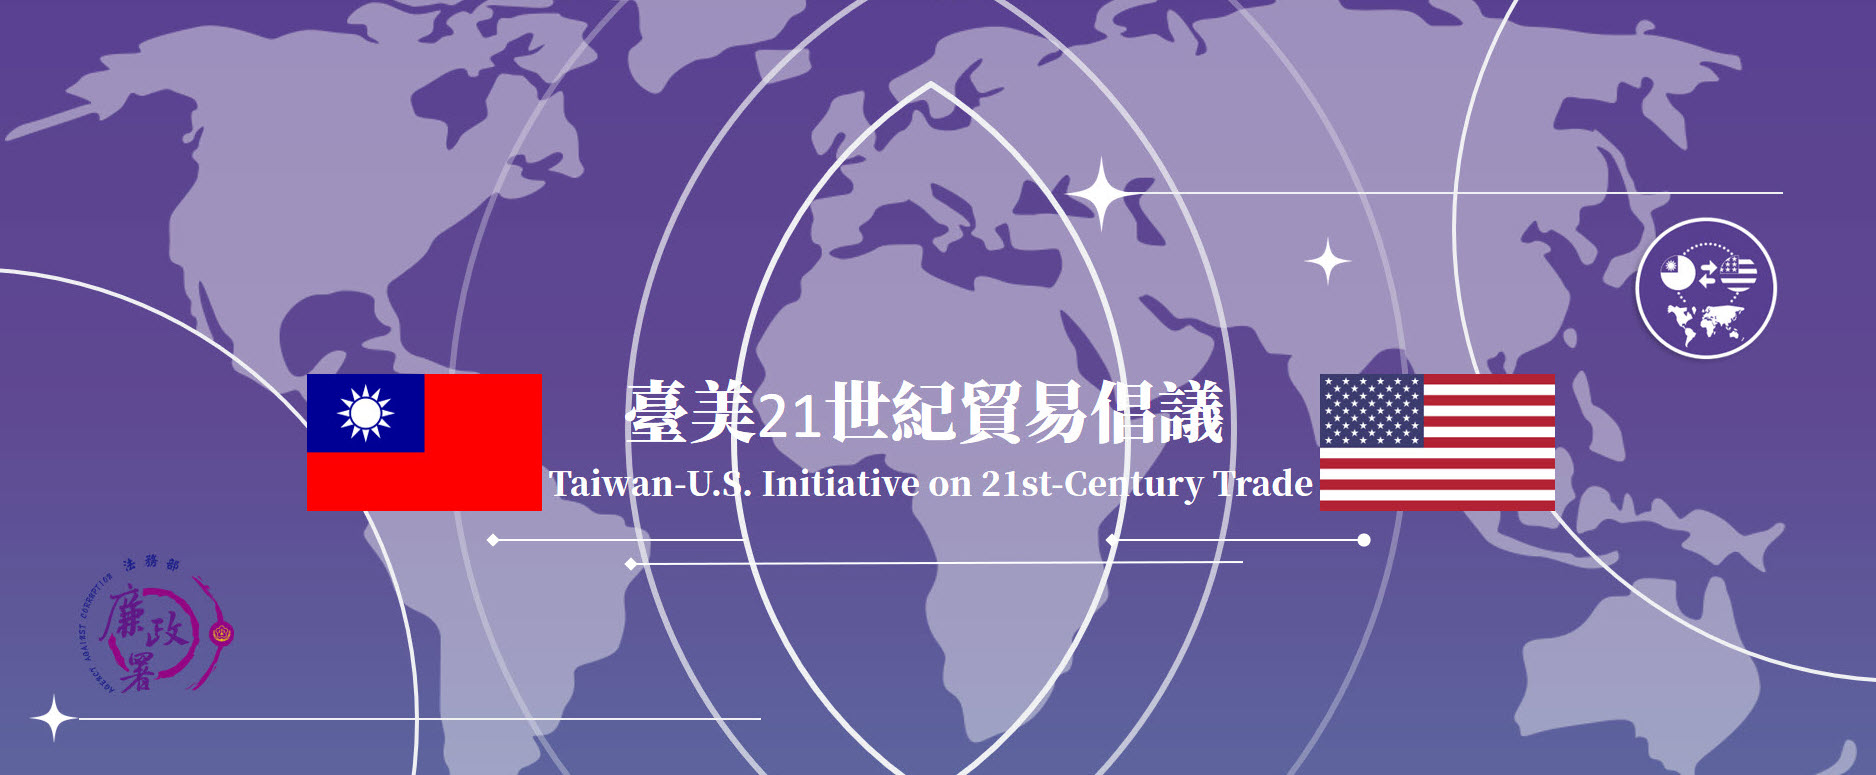 Taiwan-U.S. Initiative on 21st-Century Trade